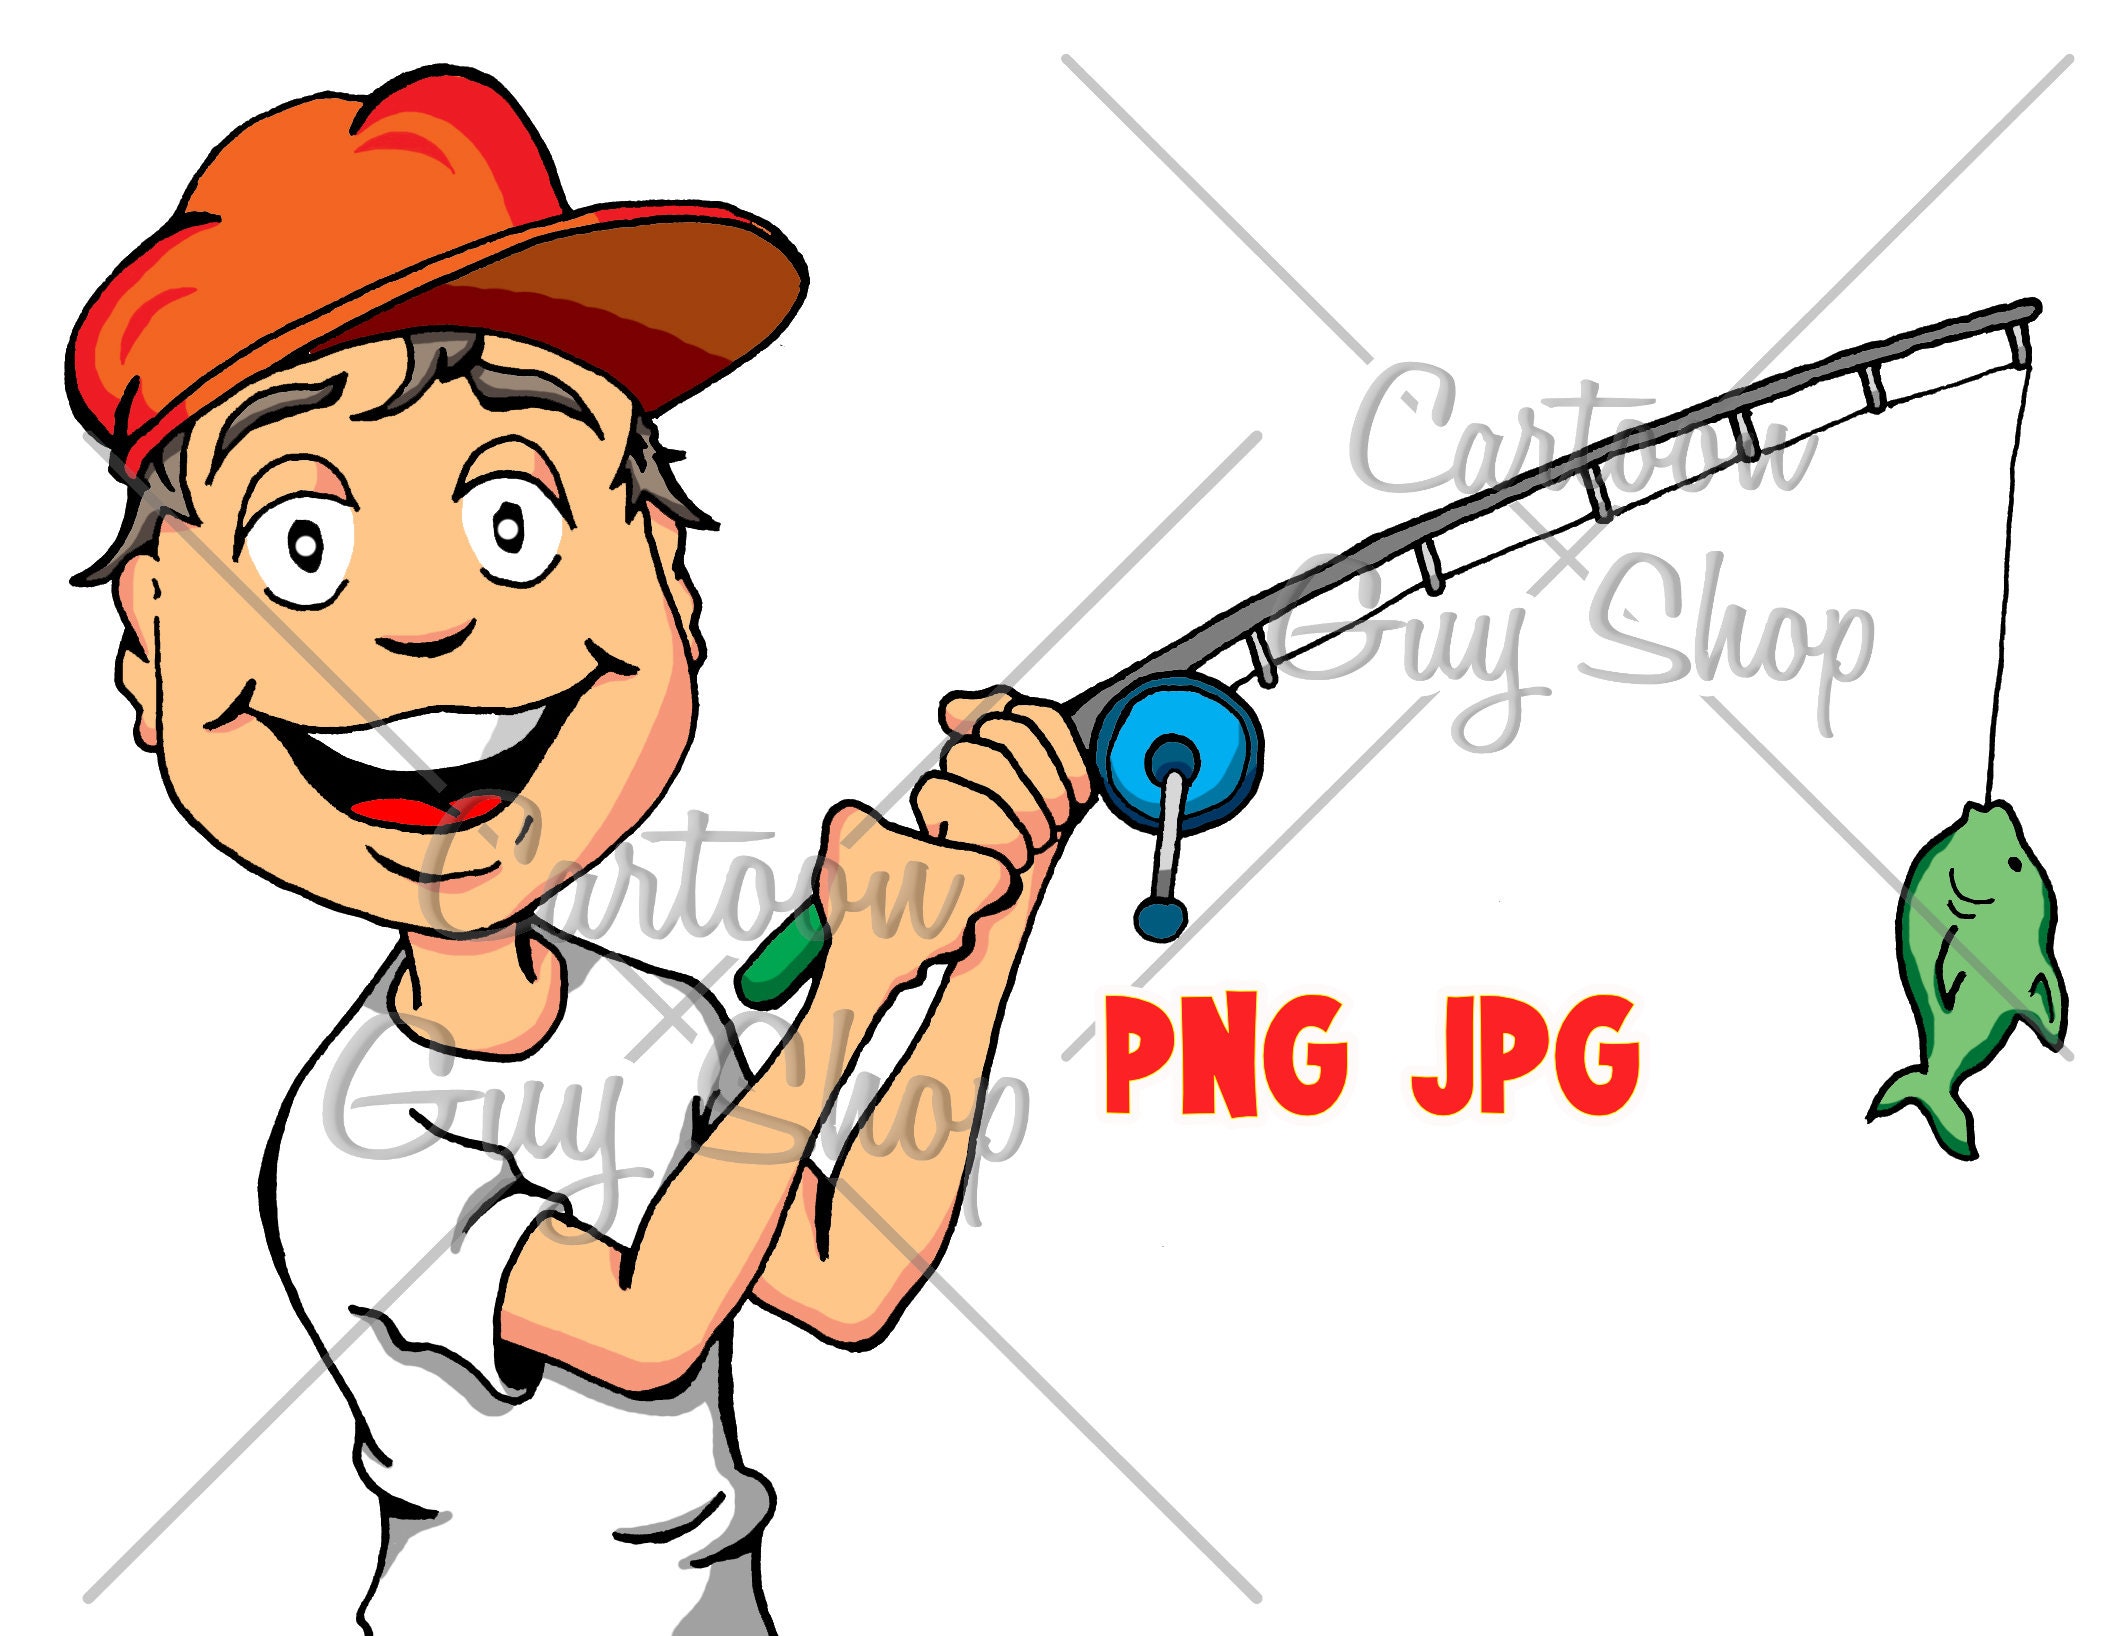 Boy Fishing PNG - JPG - Cartoon Fishing Clipart - Digital Download.